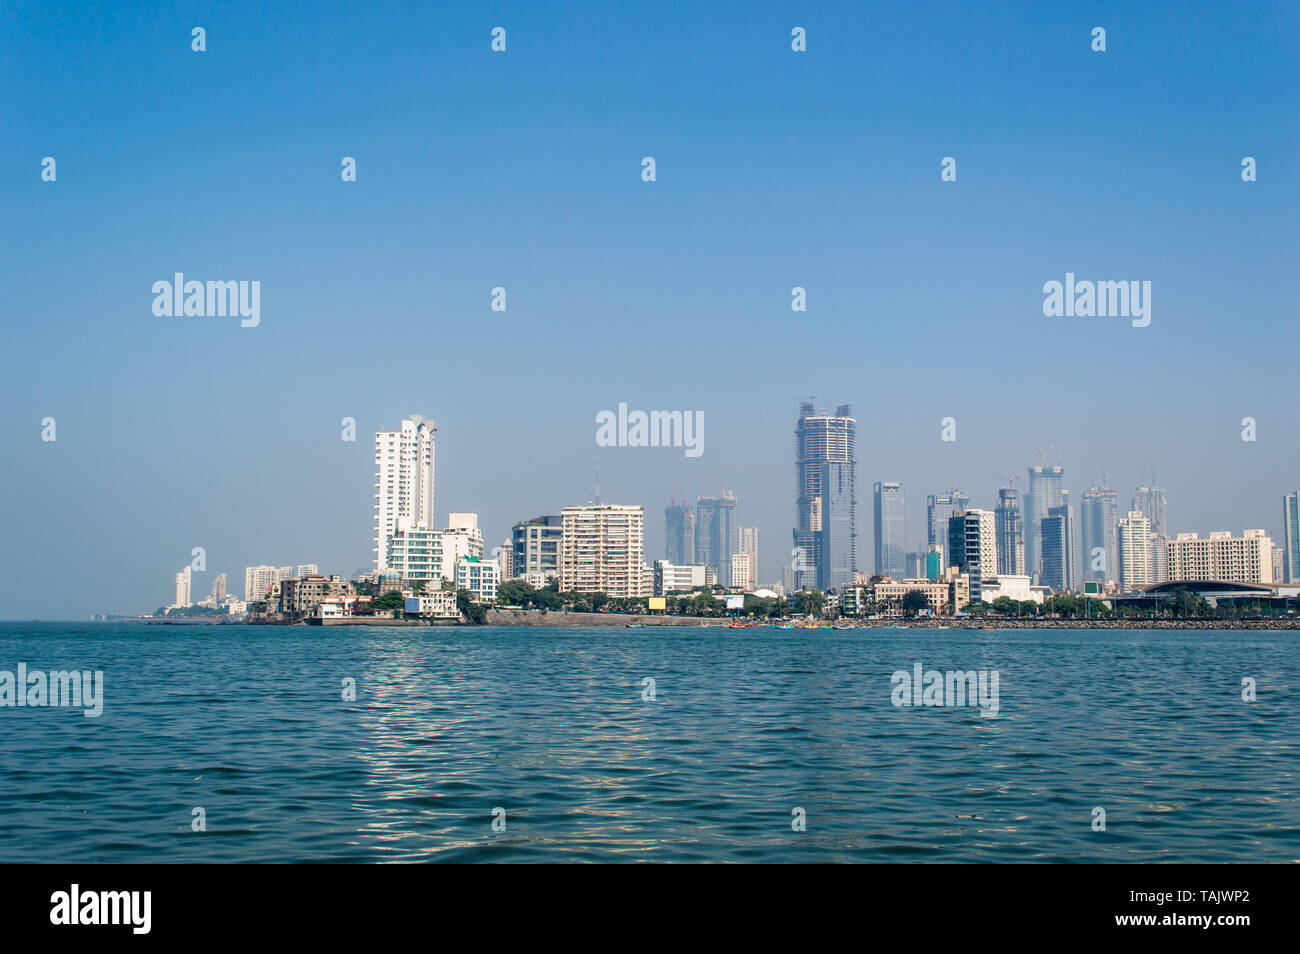 Mumbai Haji Ali Bay Maharashtra. Landscape image of tall buildings of Mumbai city taken from Haji Ali dargah situated in  Arabian sea Stock Photo